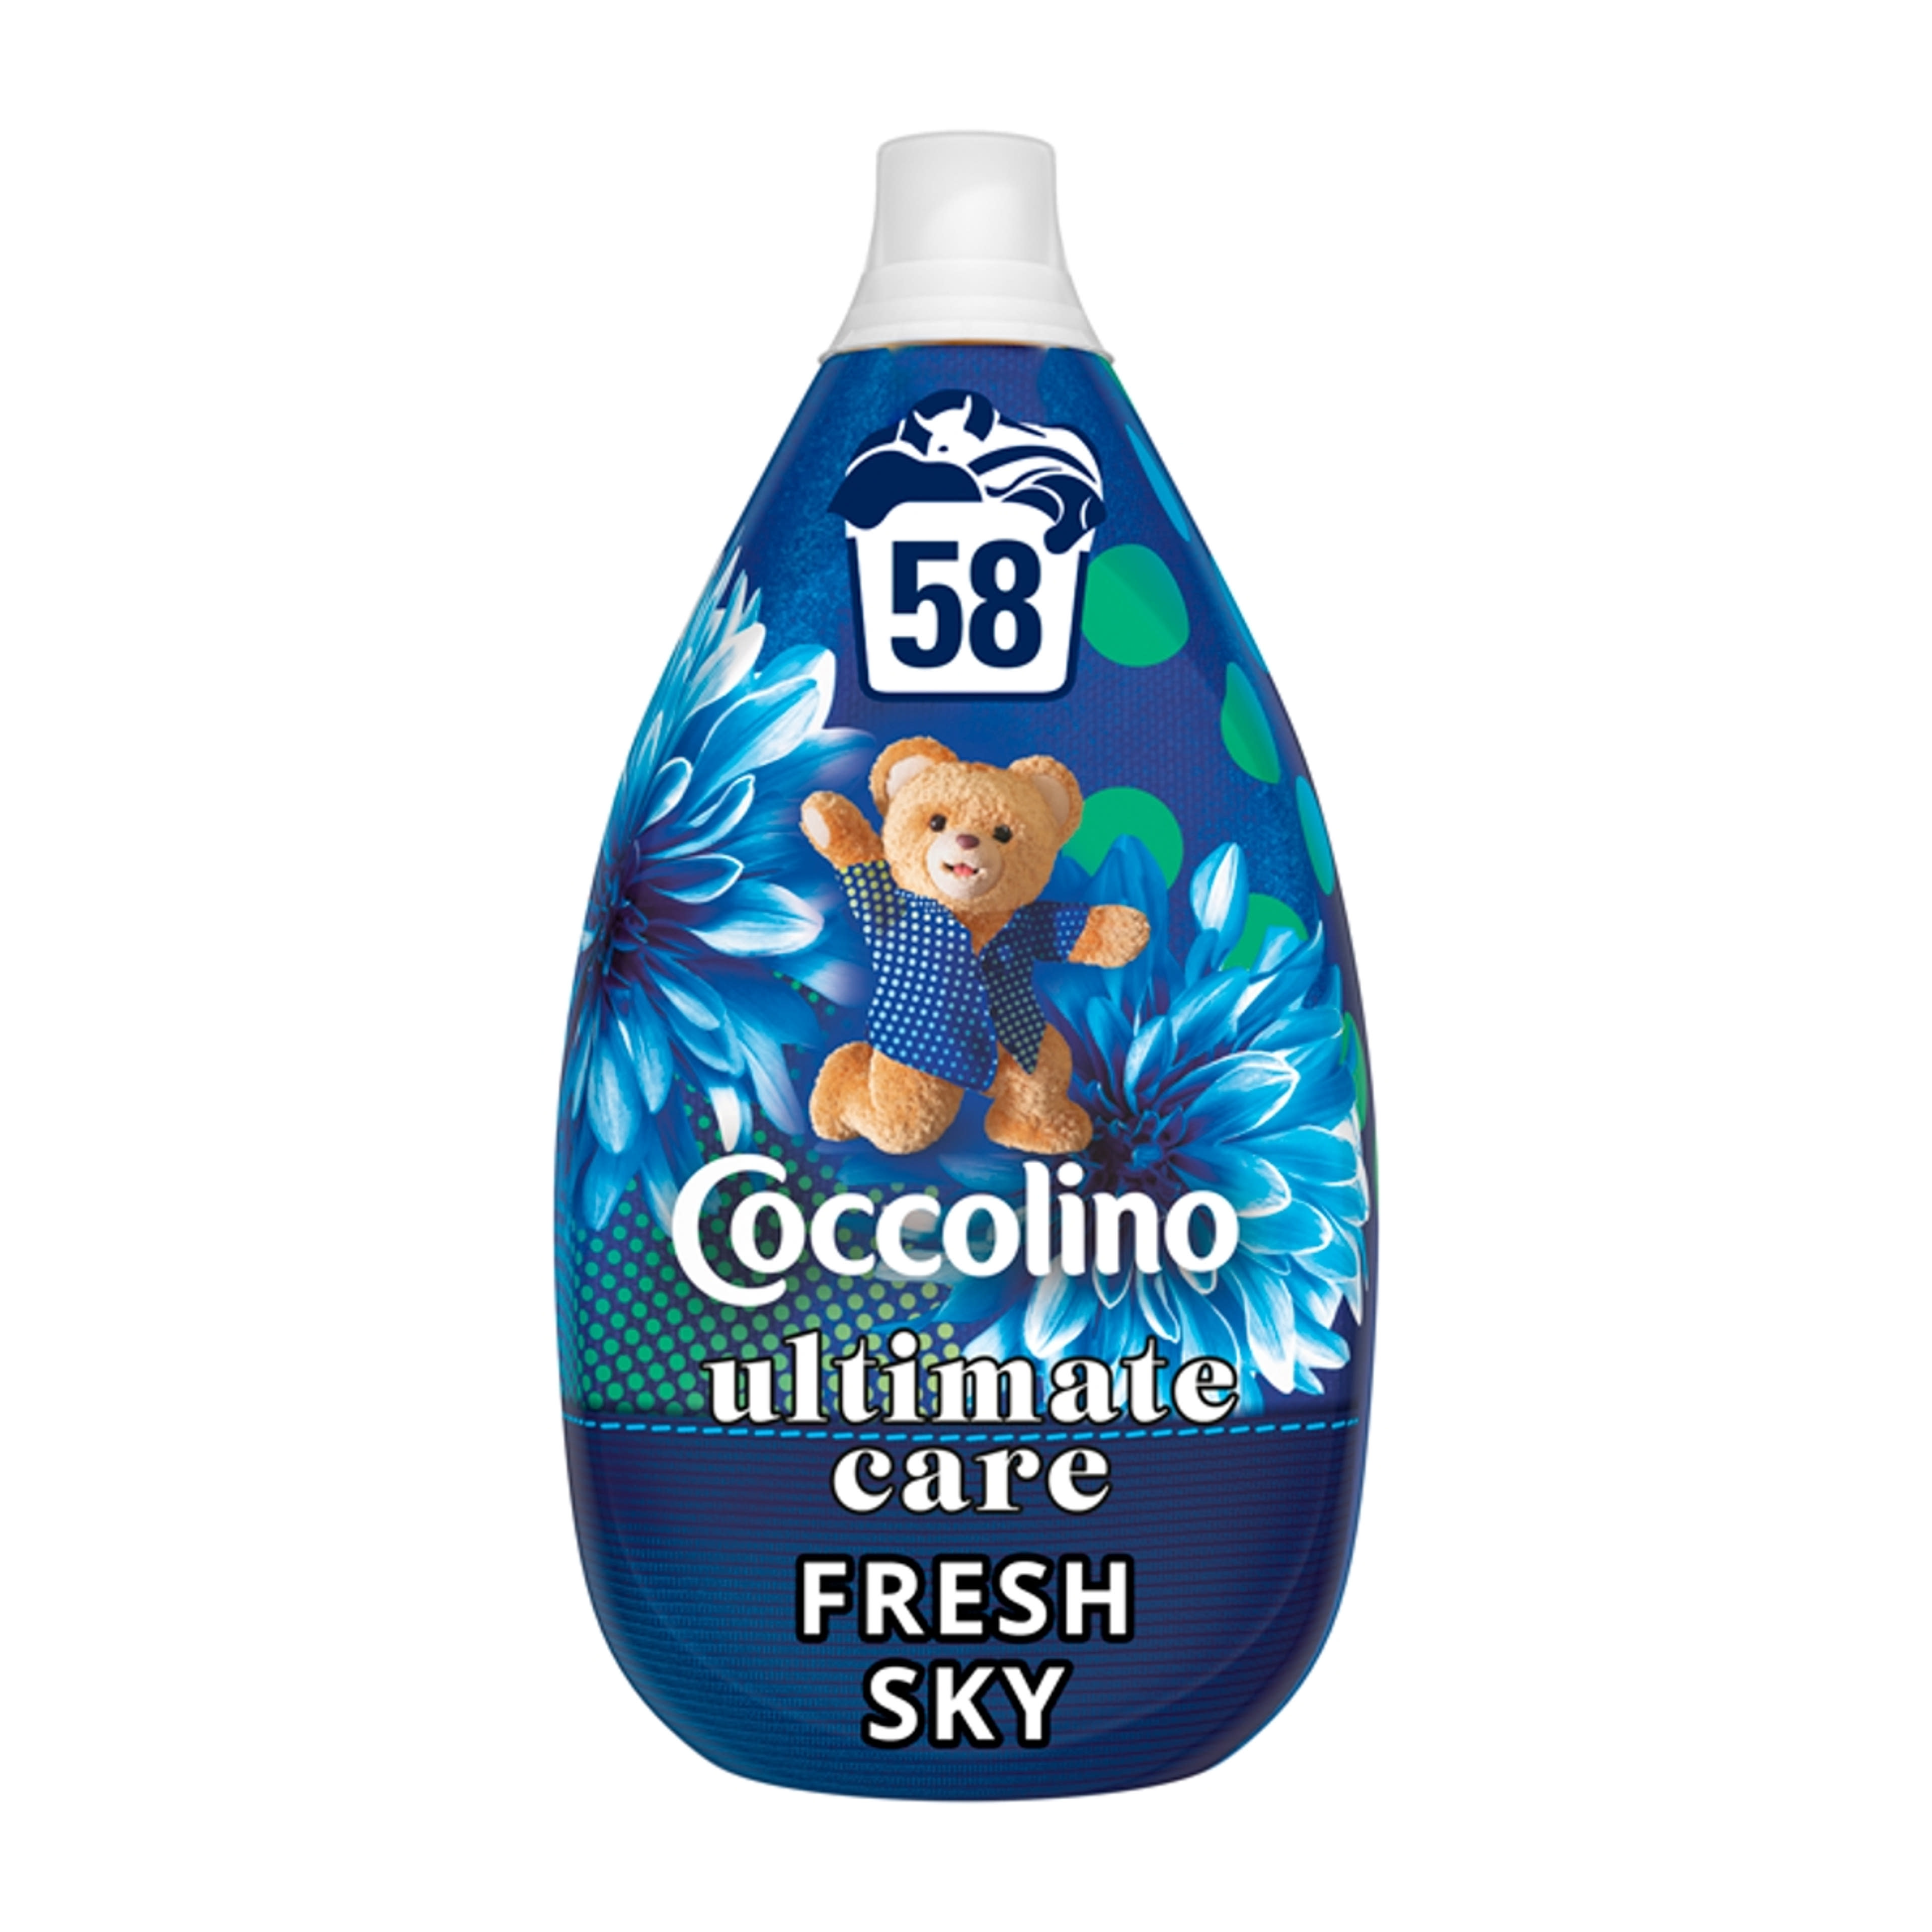 Coccolino fresh sky öblítő - 870 ml-2